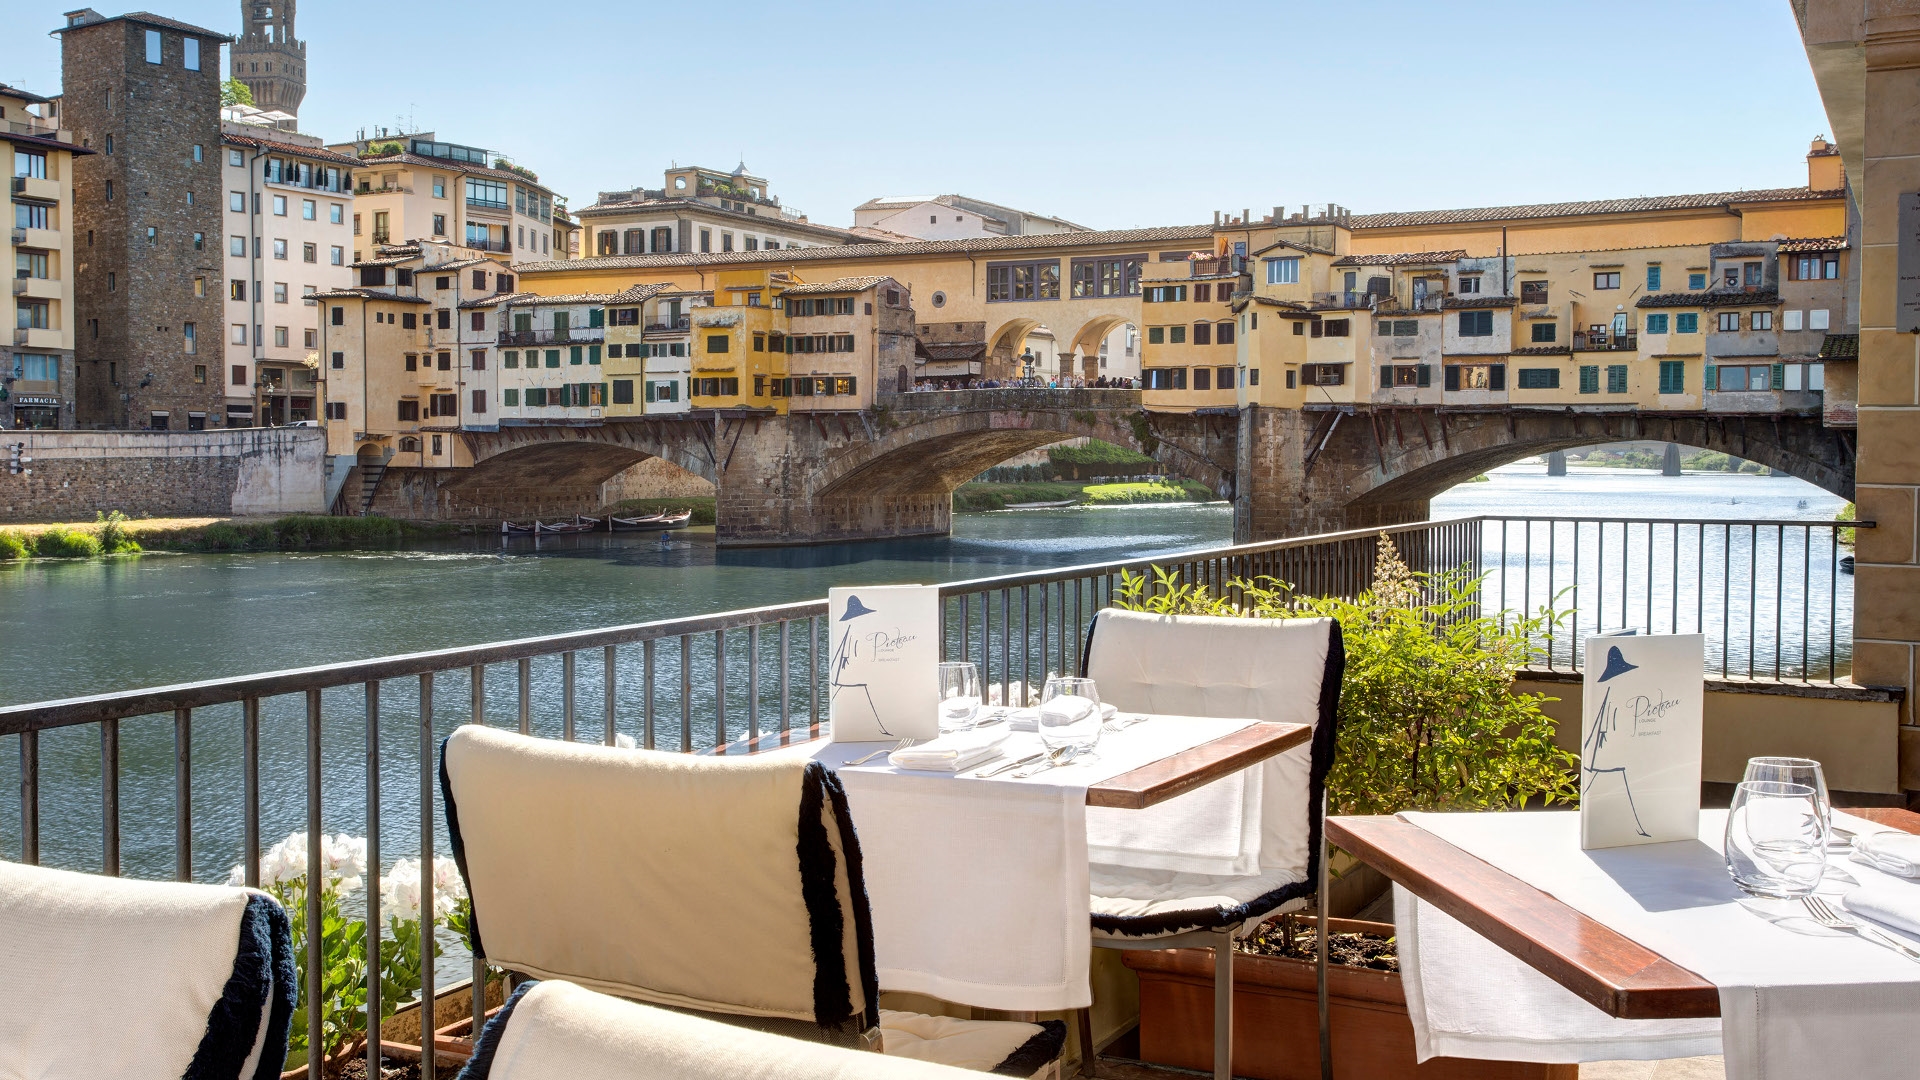 Picteau Lounge terrace - Hotel Lungarno